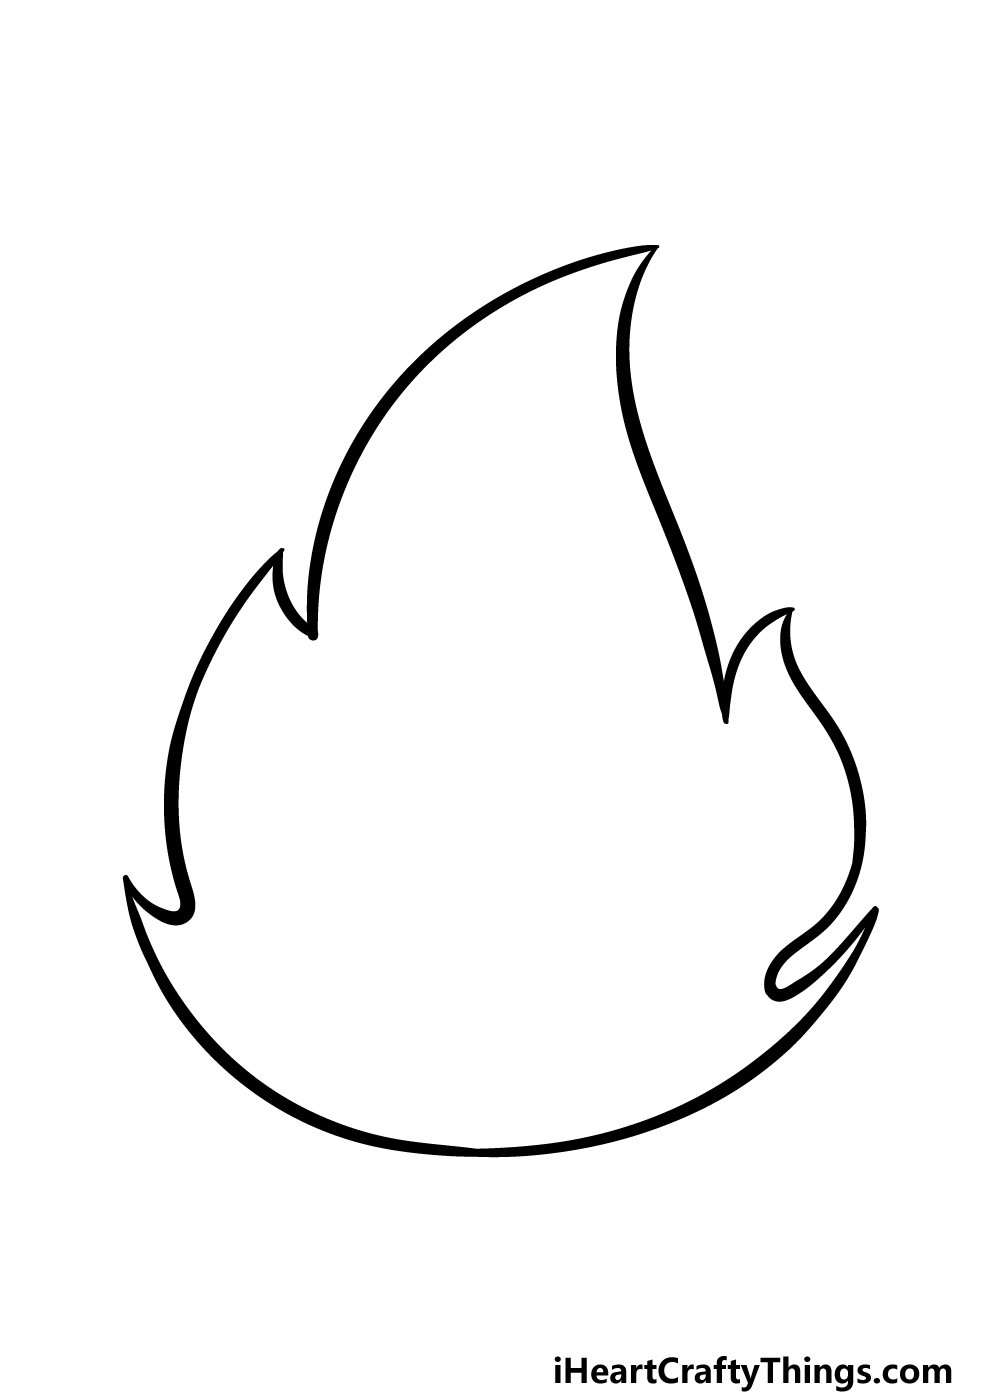 how to draw a cartoon flame step 2